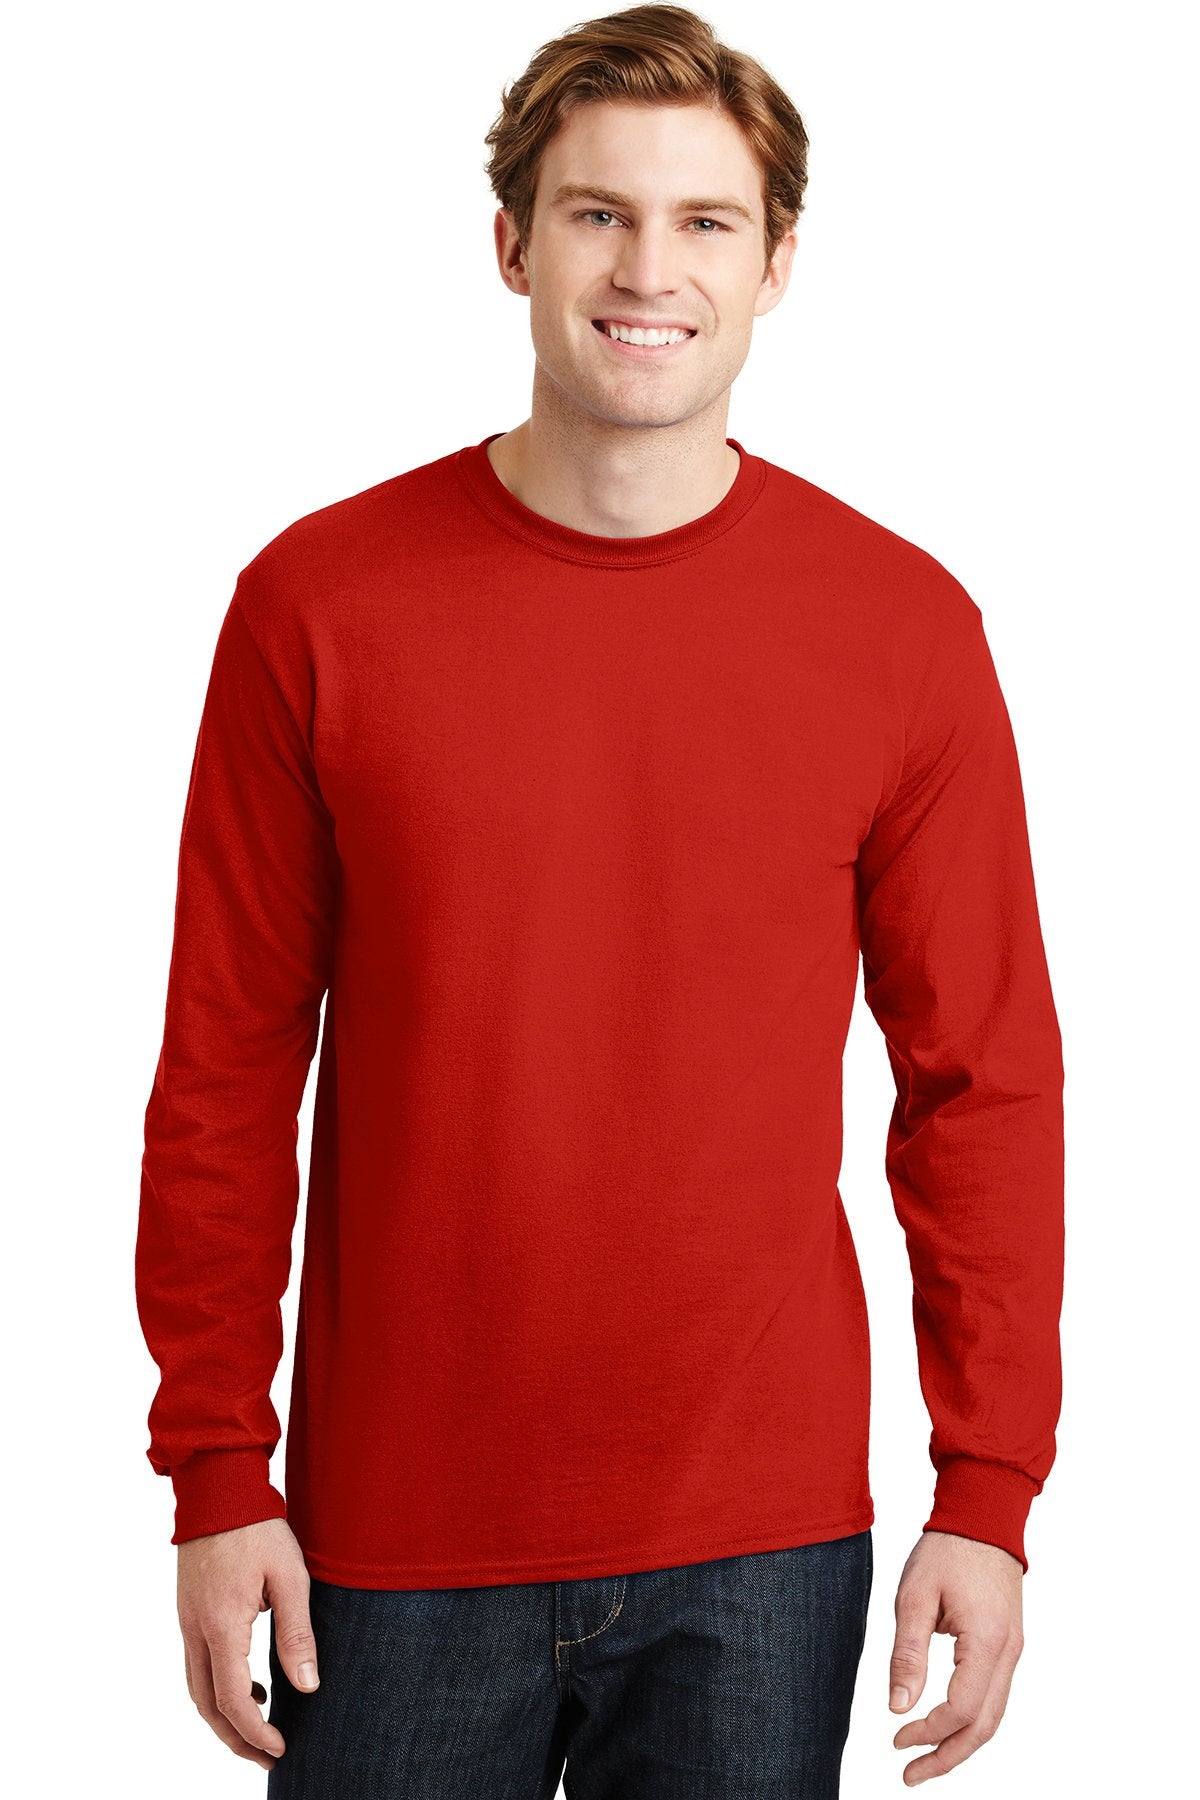 gildan dryblend cotton poly long sleeve t shirt 8400 red